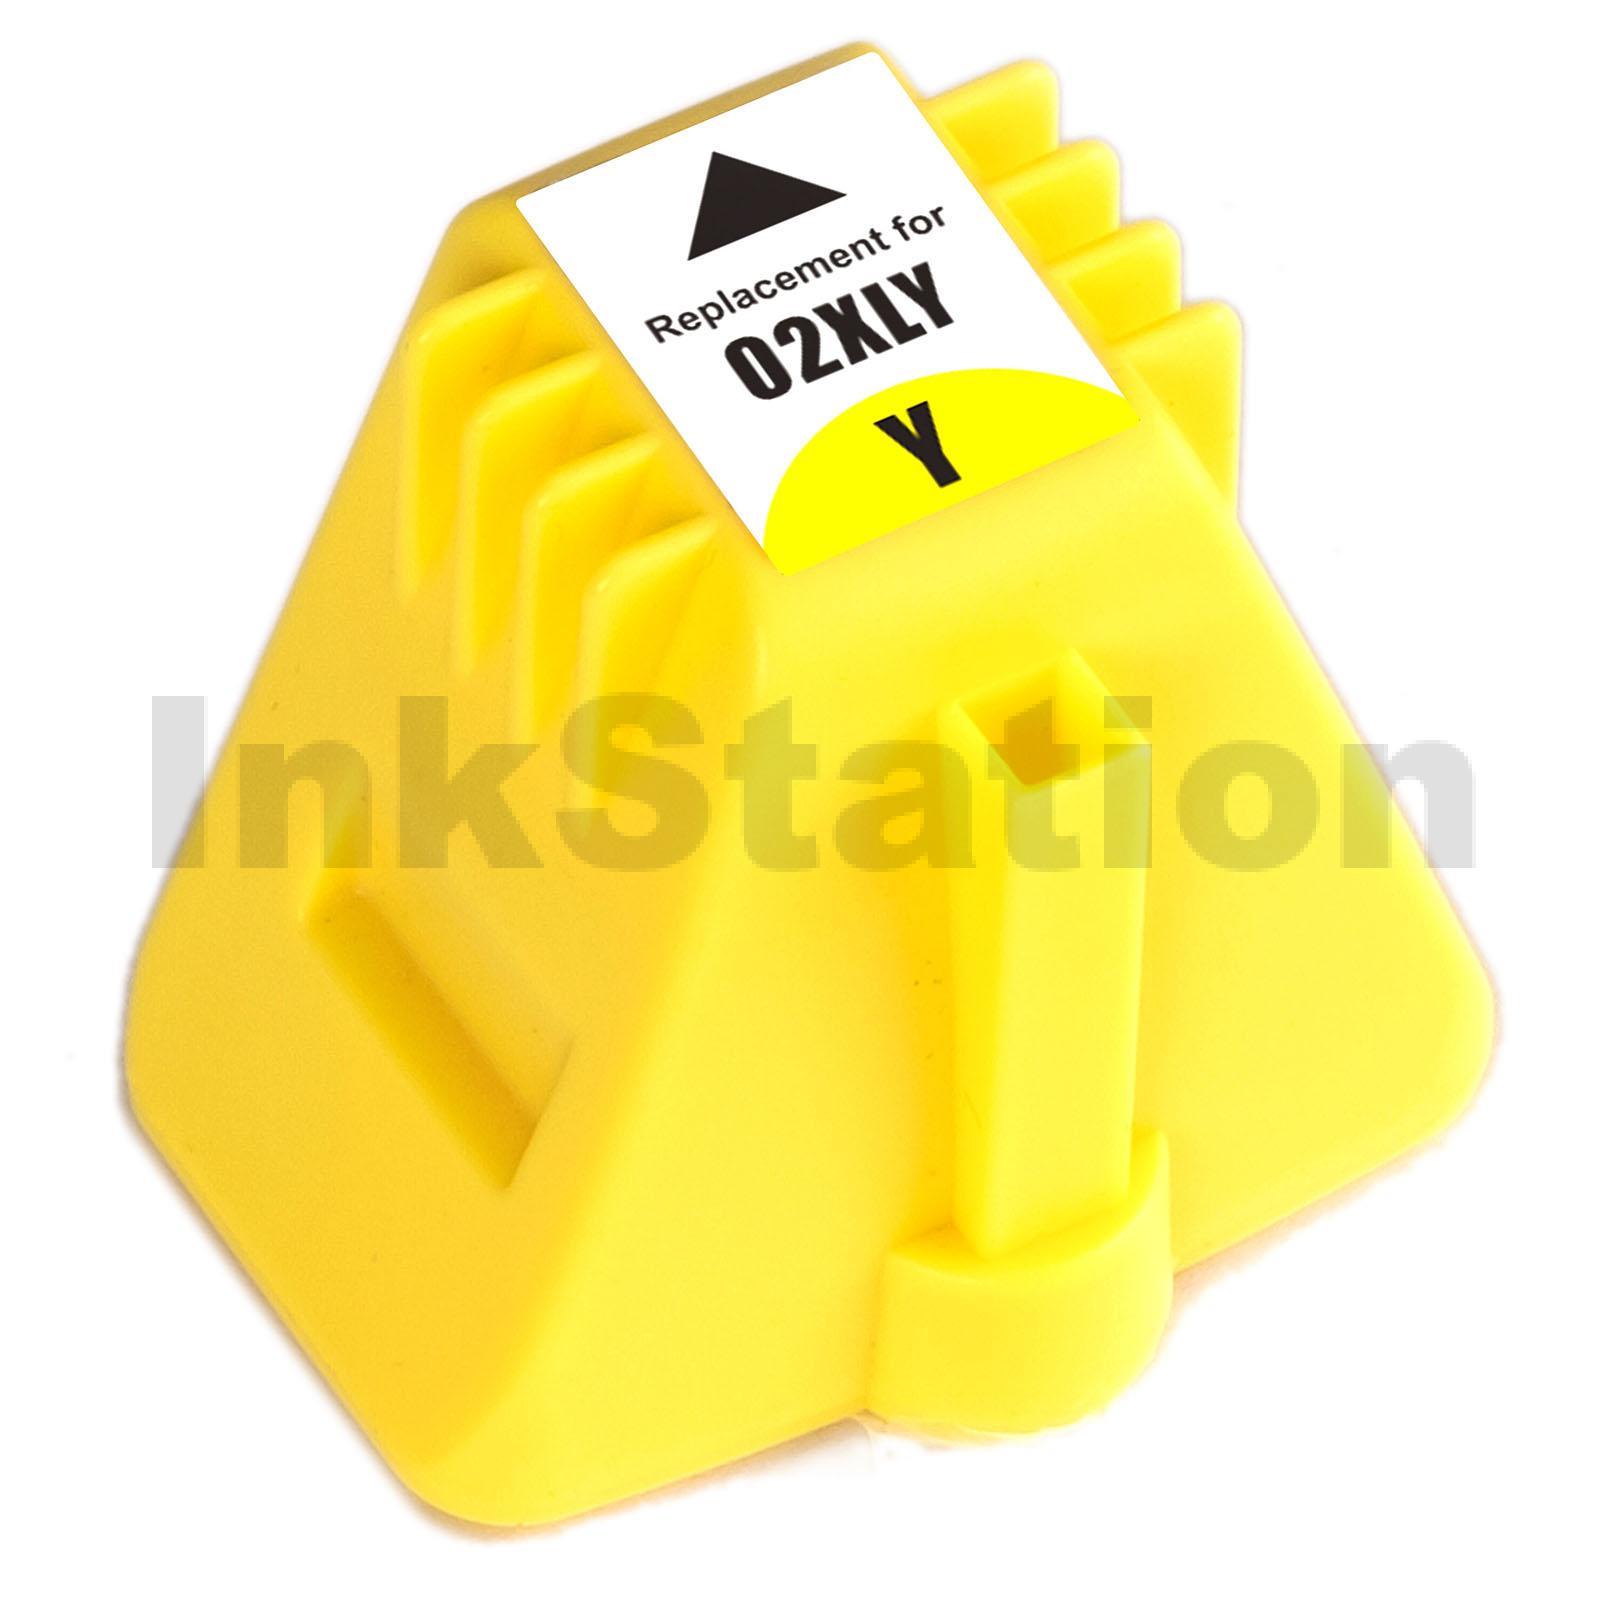 HP Photosmart D7200 Yellow Ink Cartridge